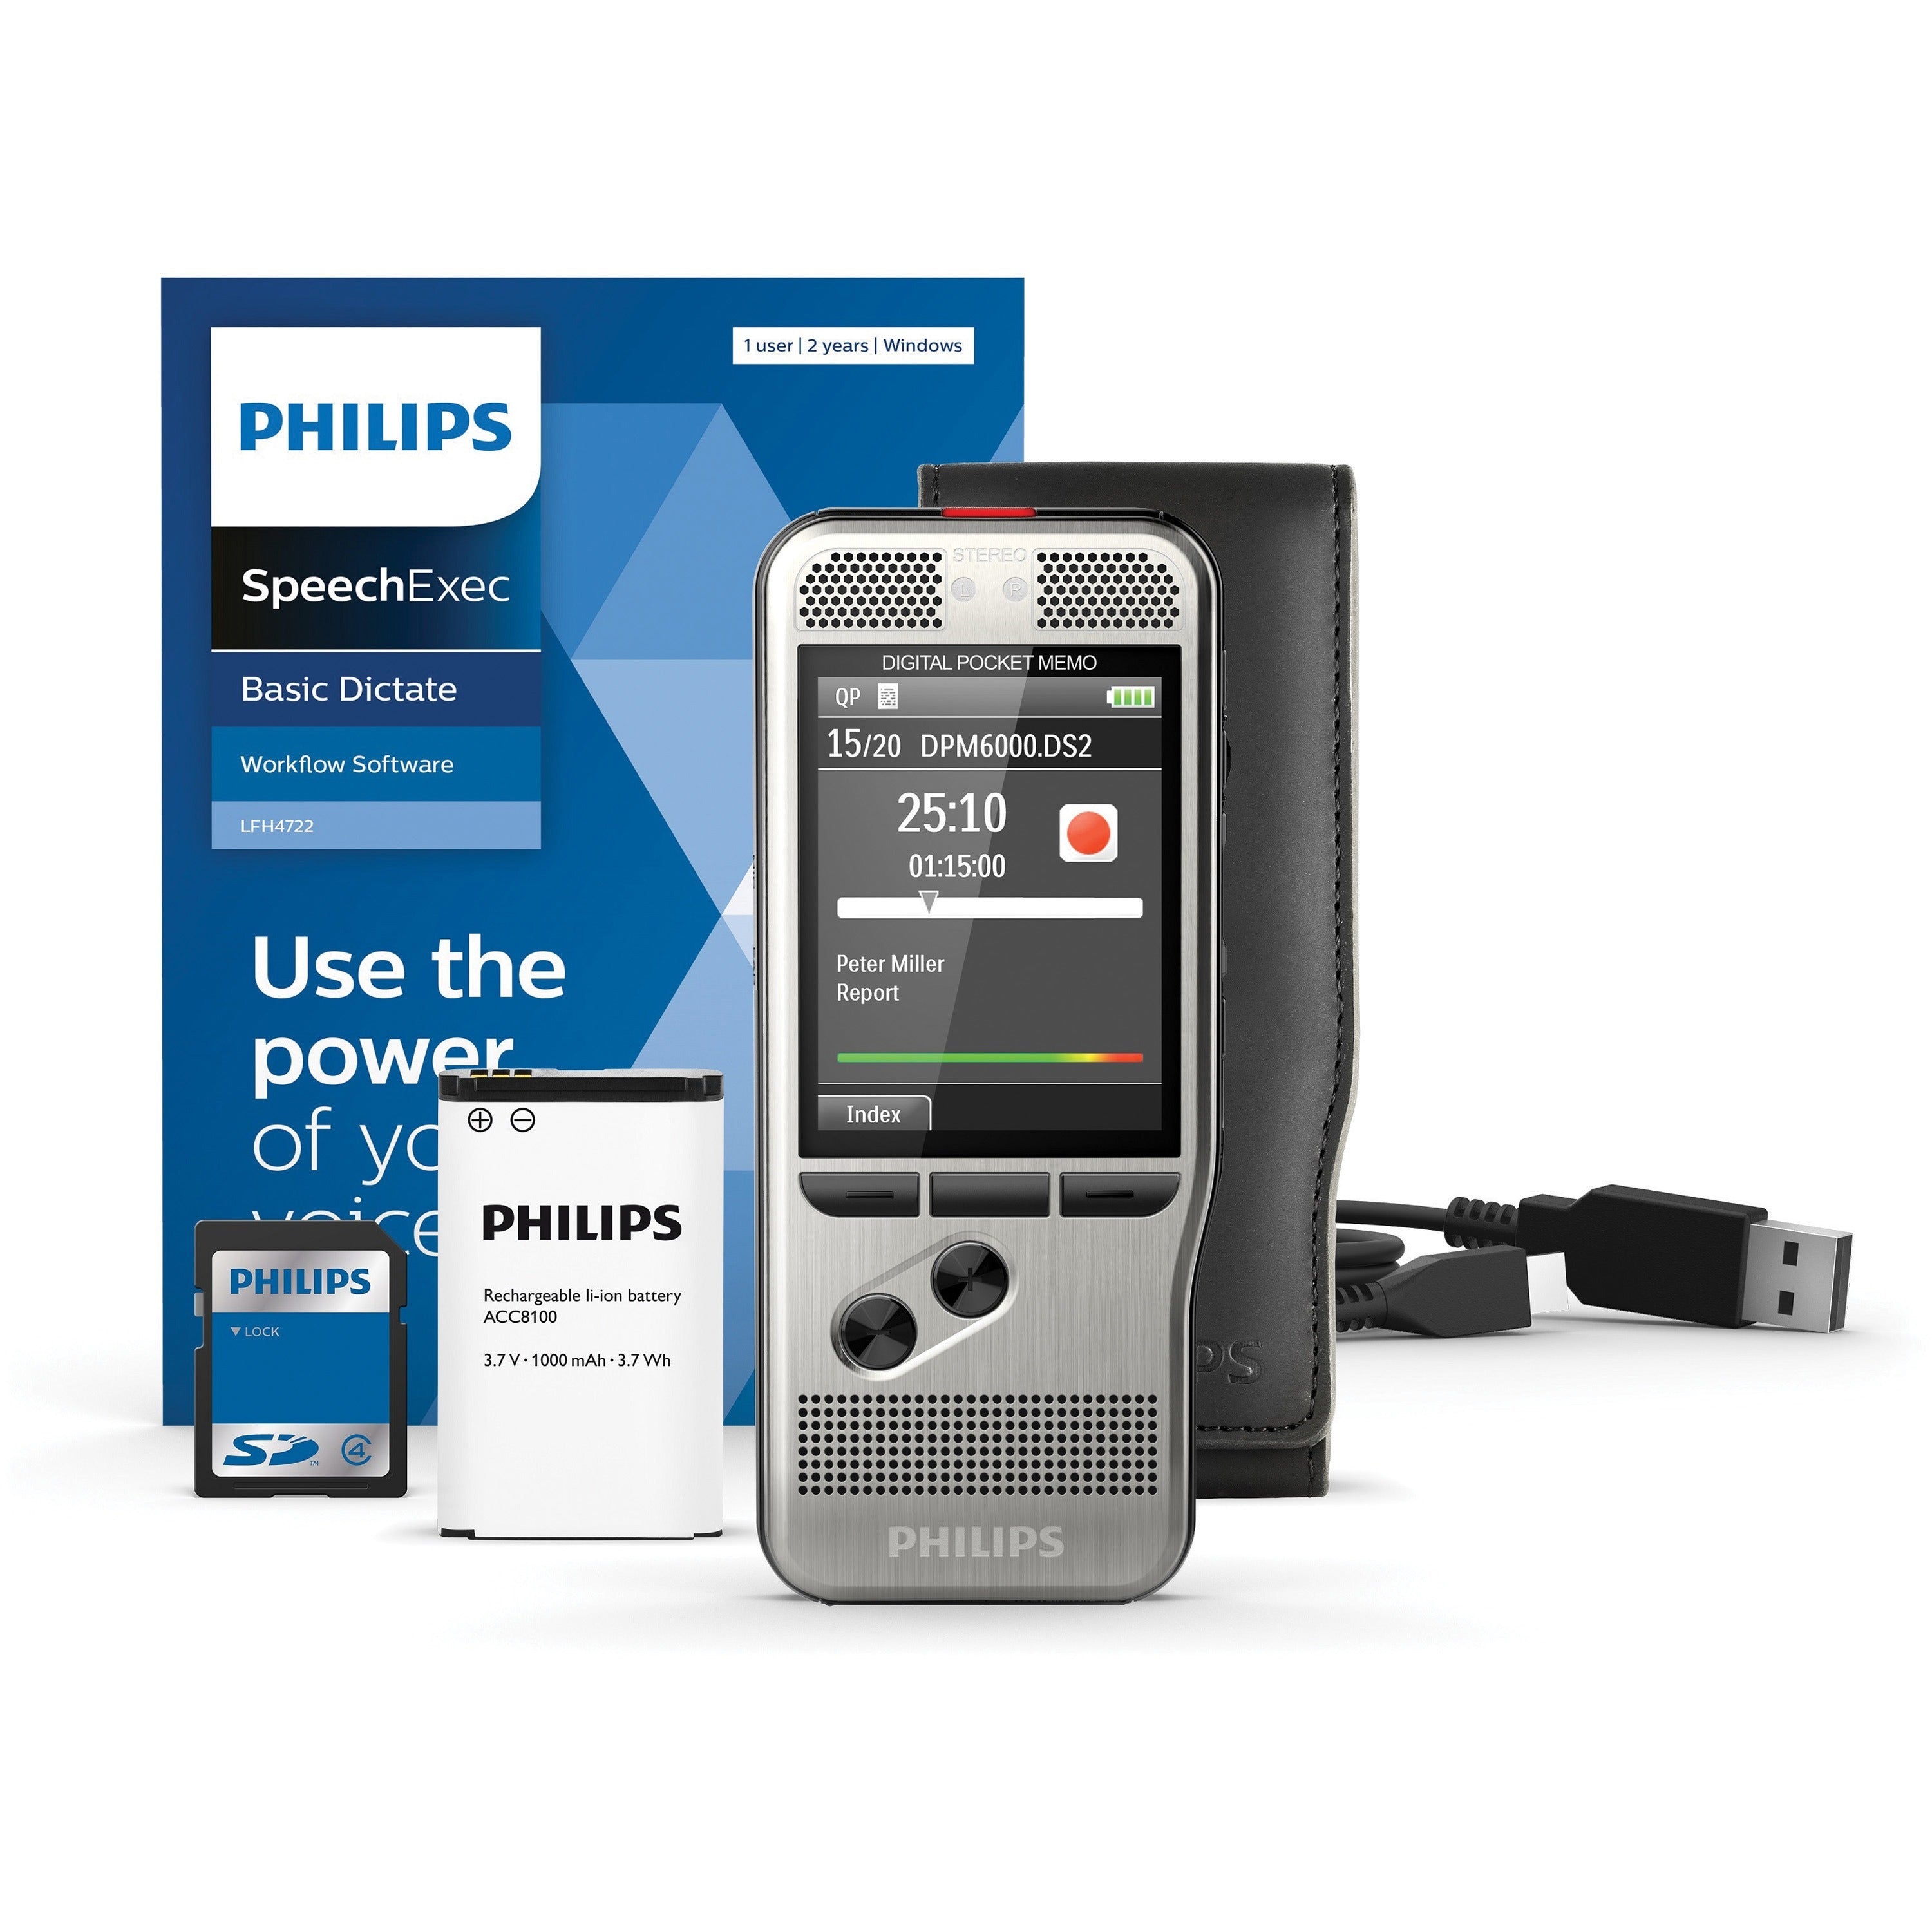 philips-pocket-memo-voice-recorder-dpm6000-microsd-microsdhc-supported-24-lcd-dss-mp3-wav-headphone-portable_pspdpm600002 - 1